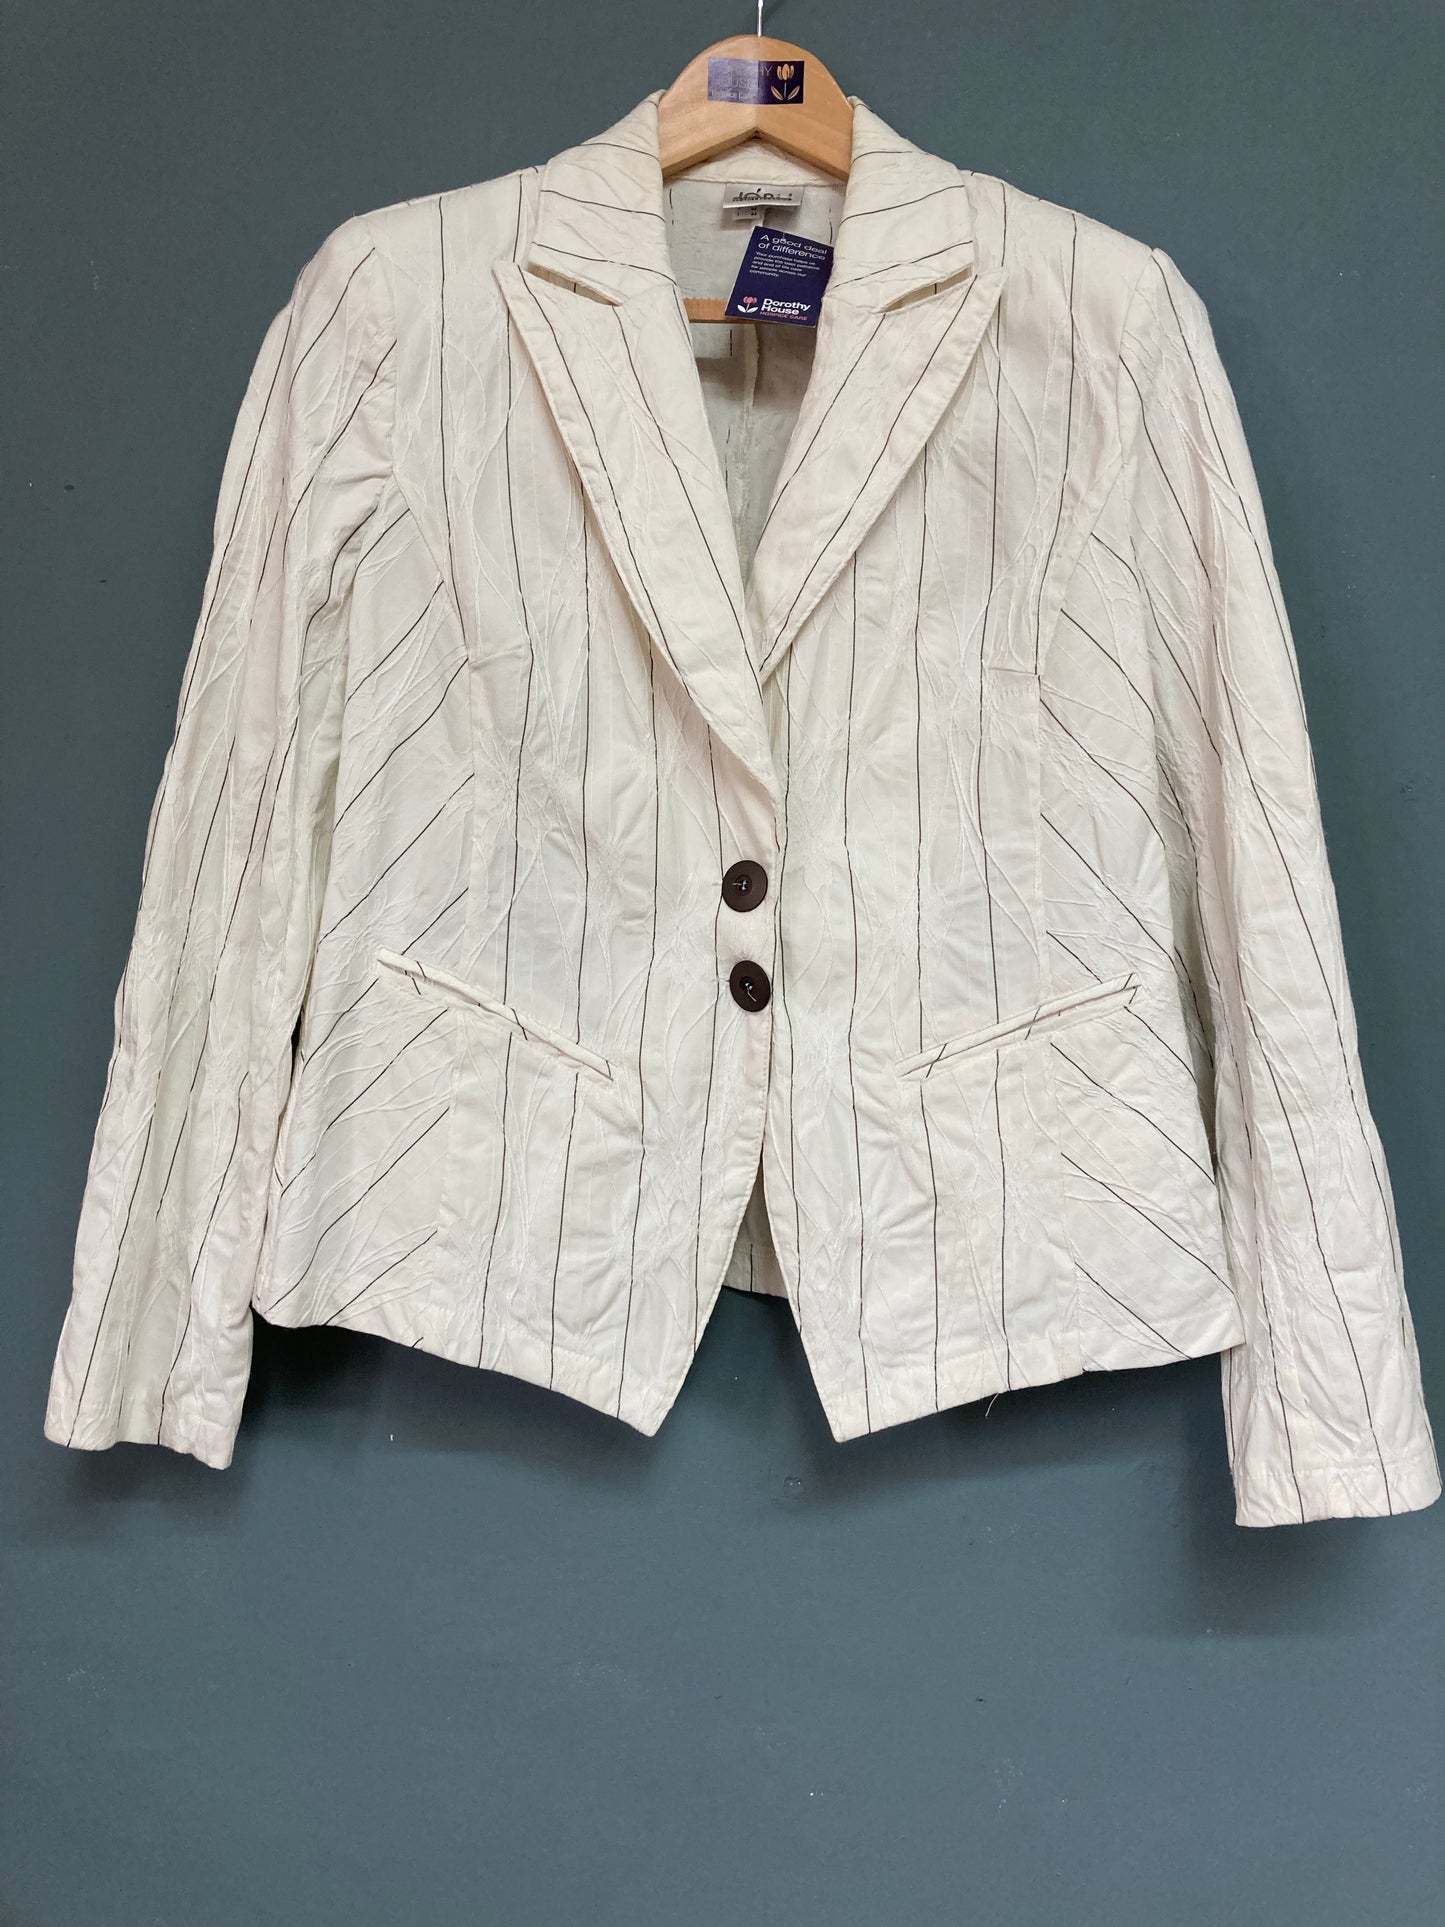 Jorli Striped Lightweight Jacket Size 12